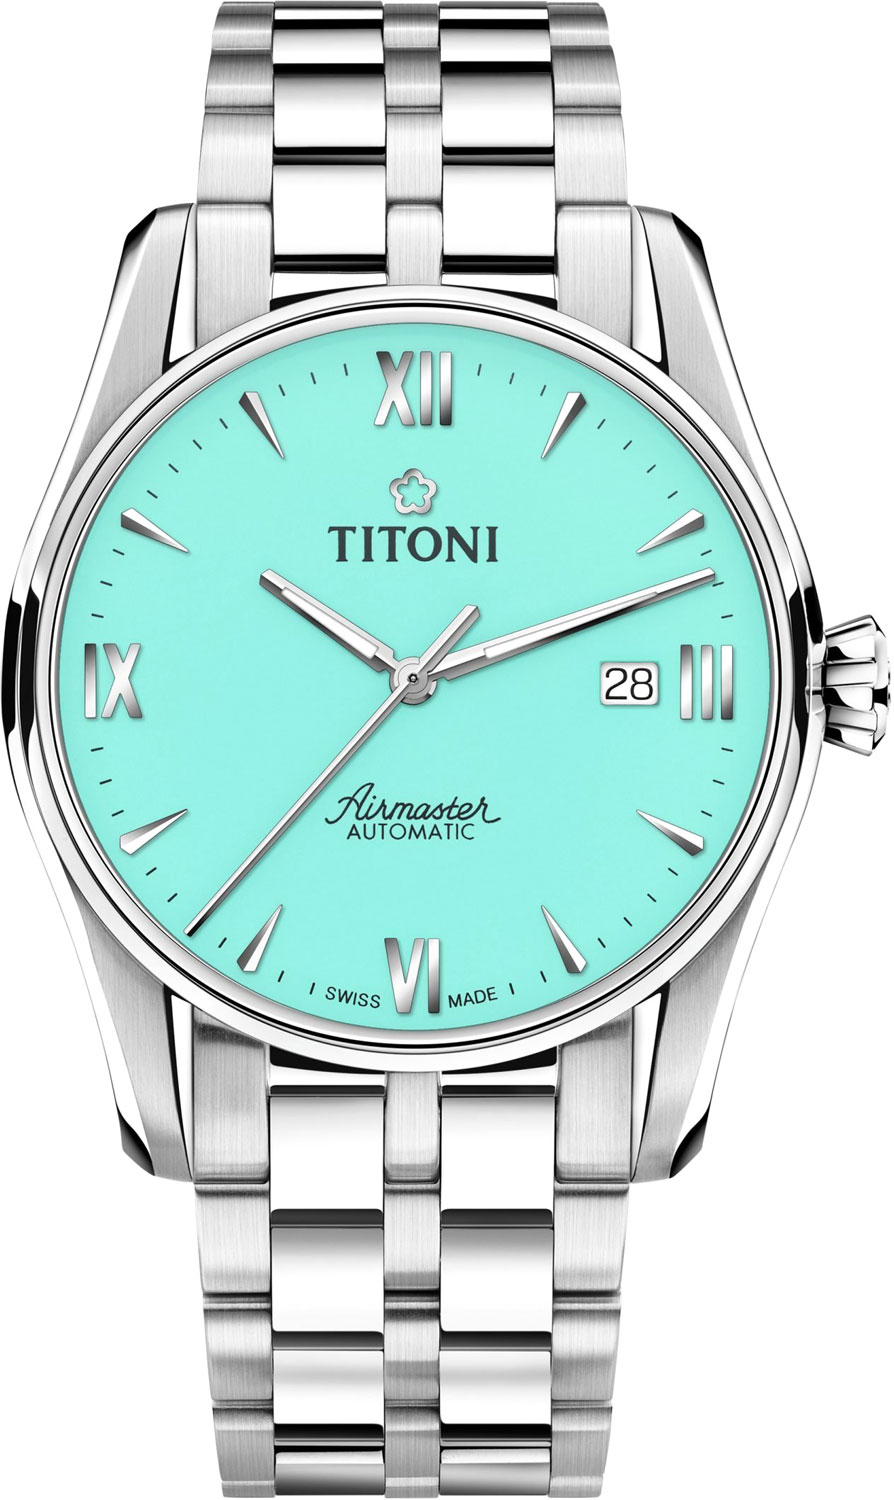     Titoni 83908-S-691